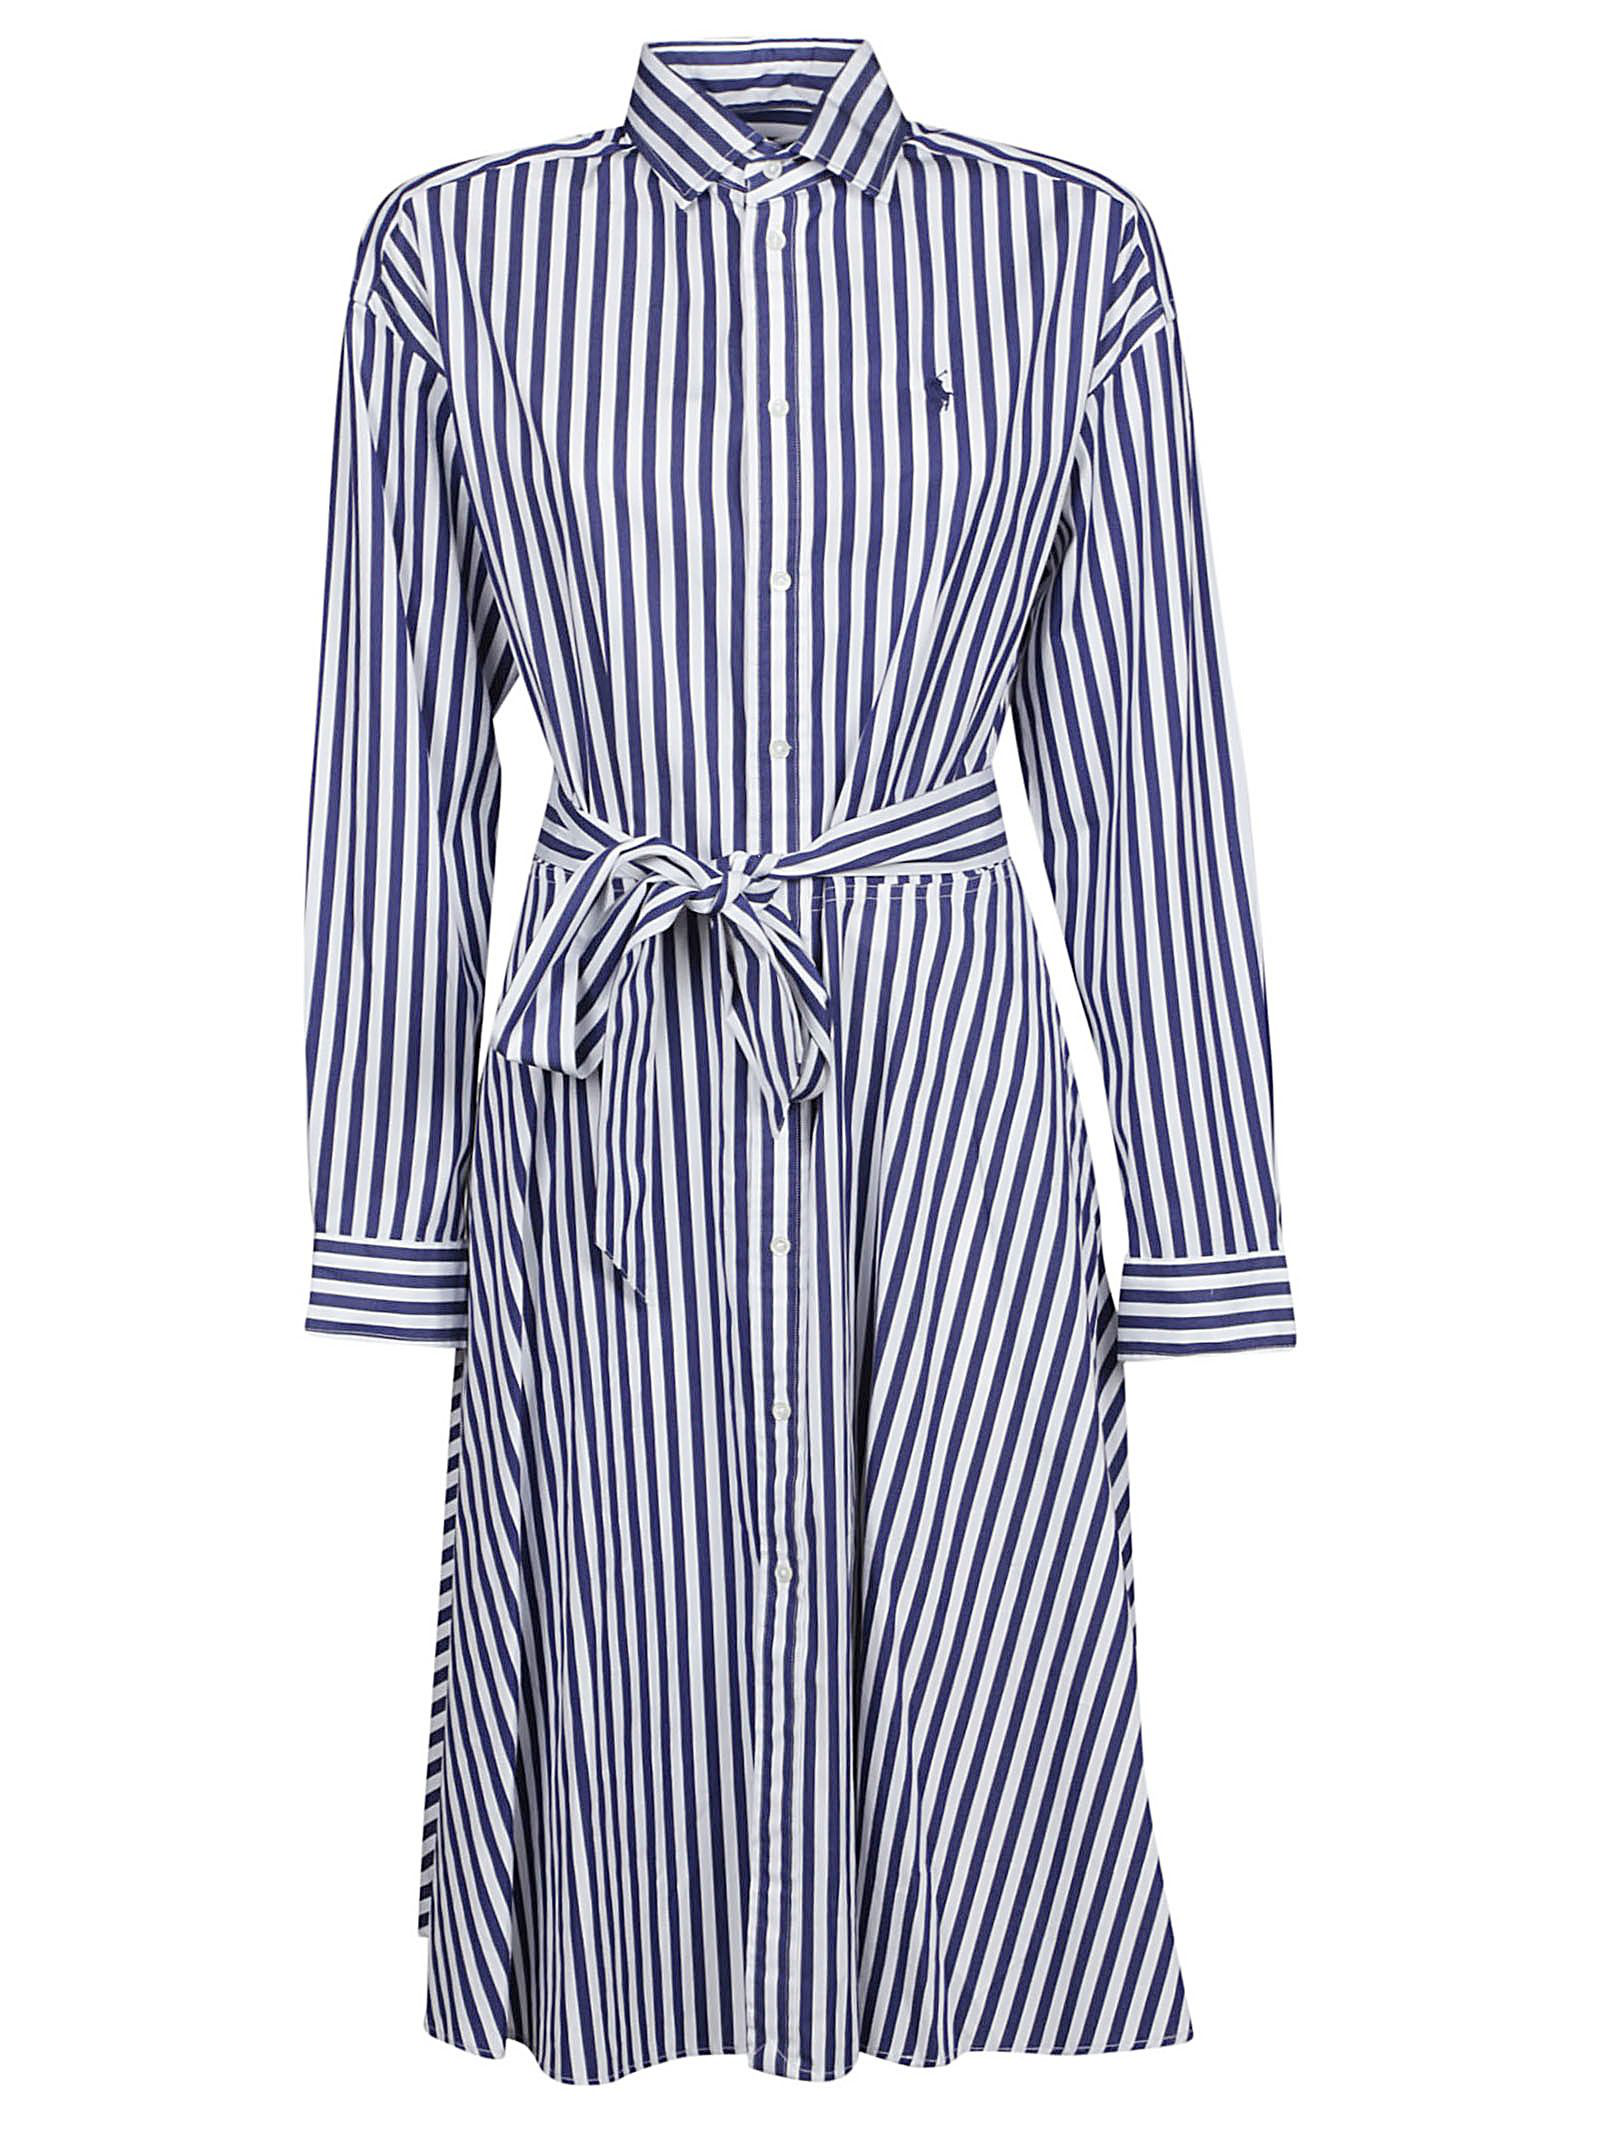 ralph lauren navy blue and white dress